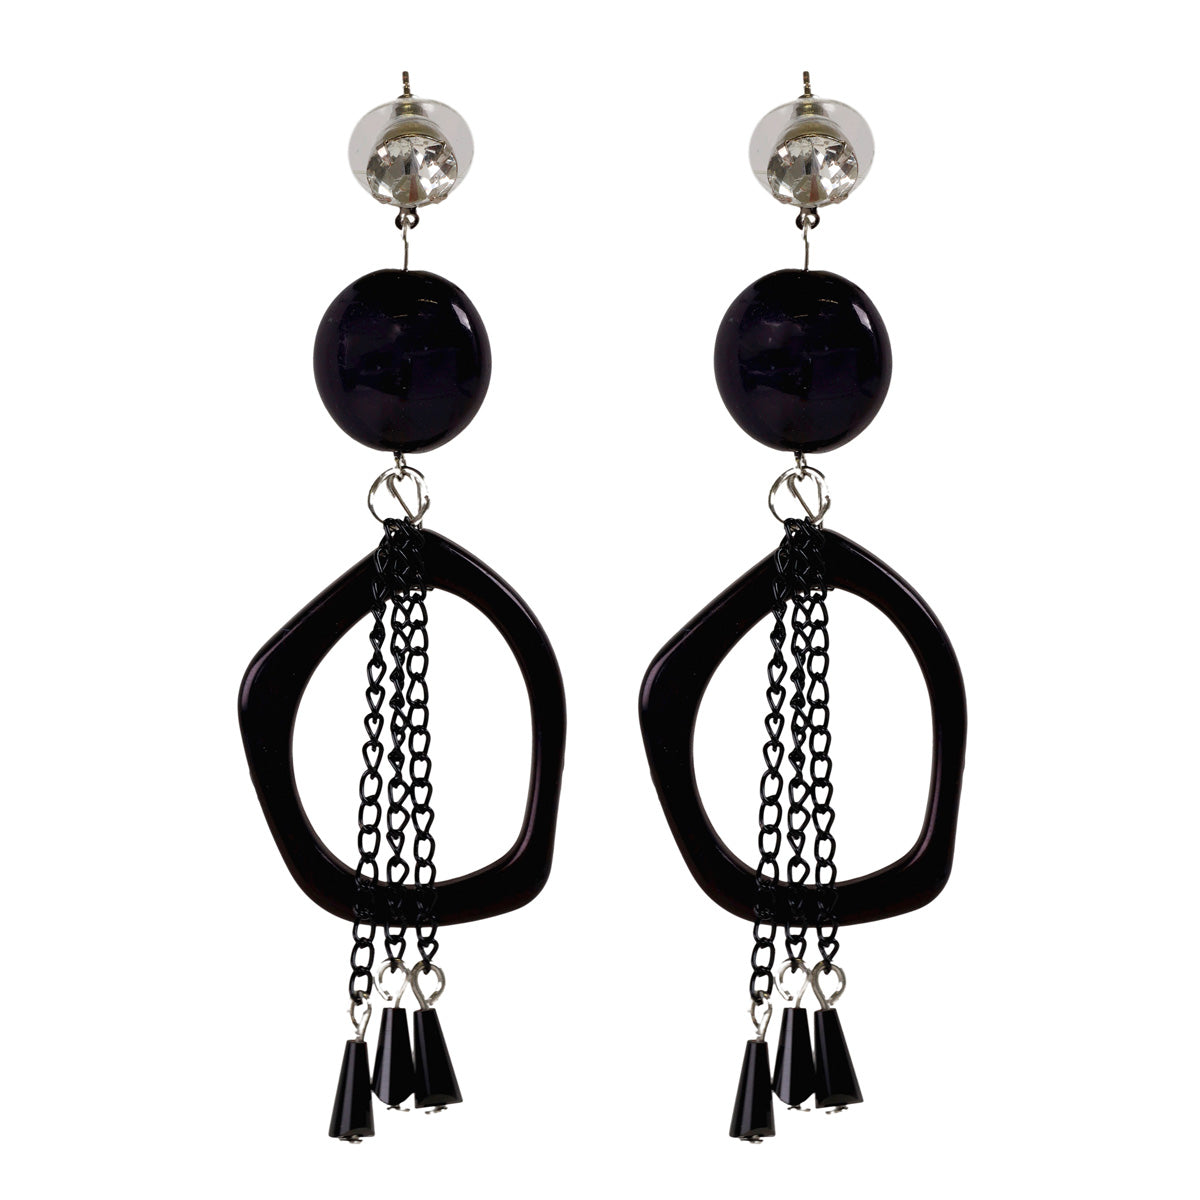 Chain hanging earrings